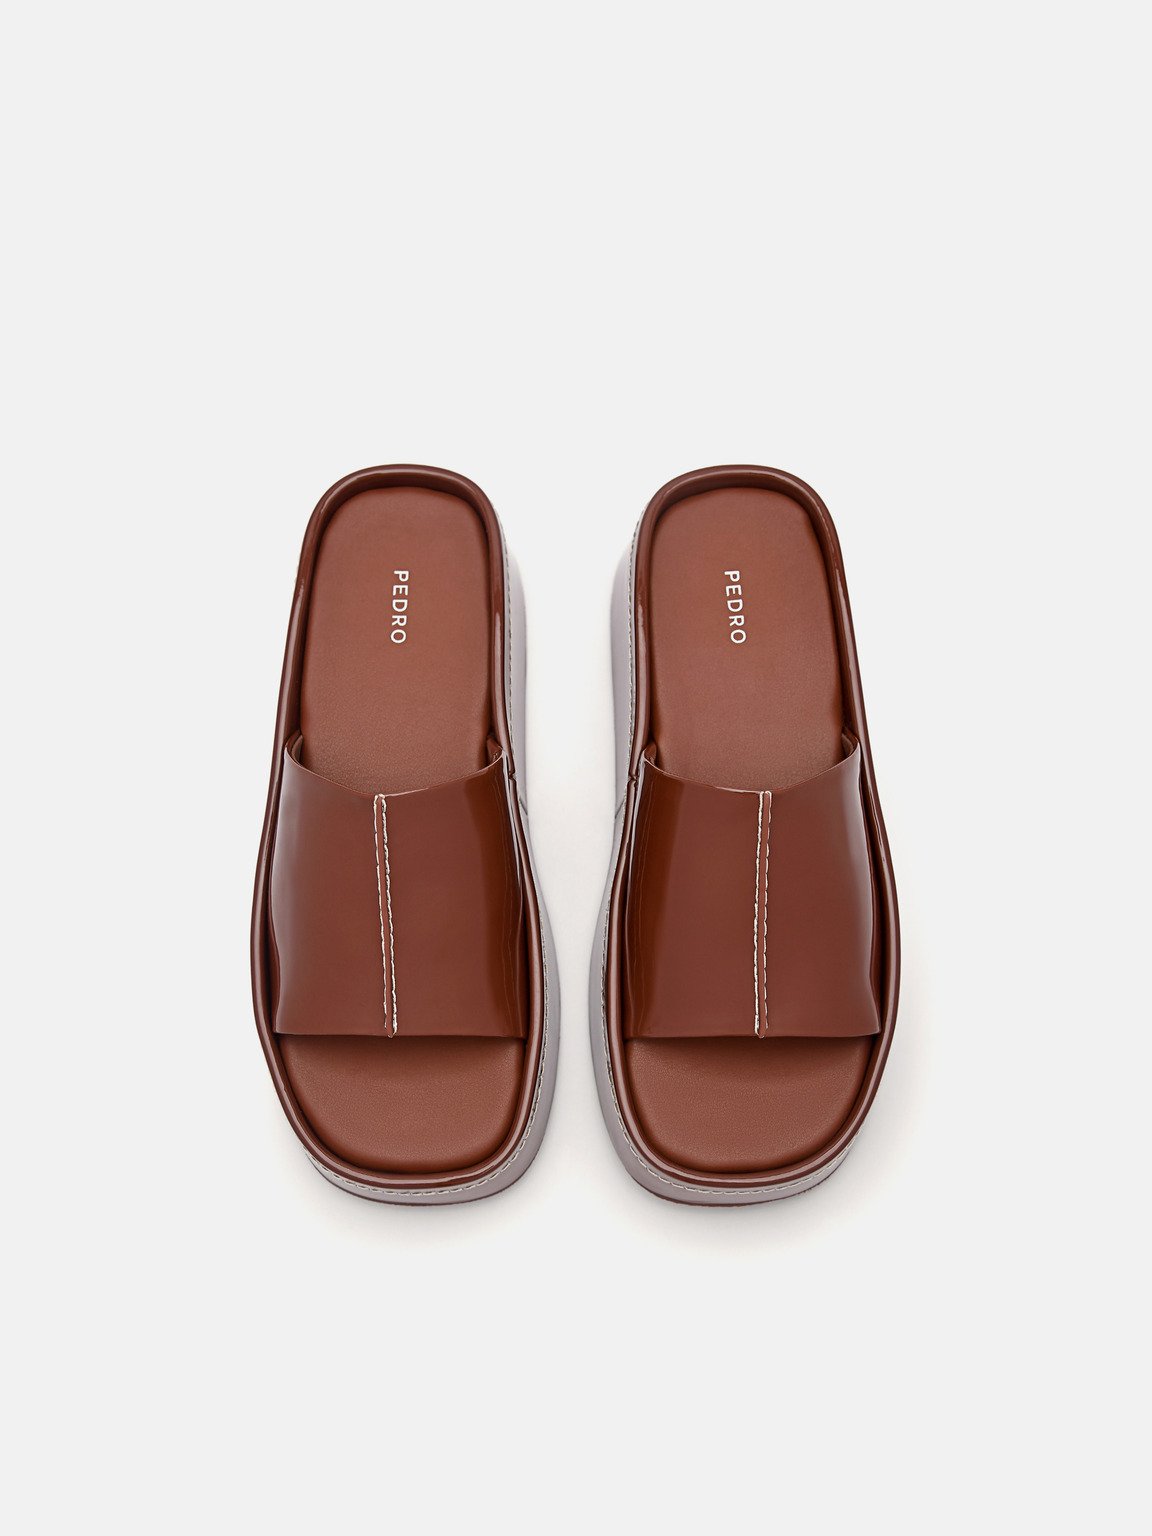 Carmen Platform Sandals, Brown